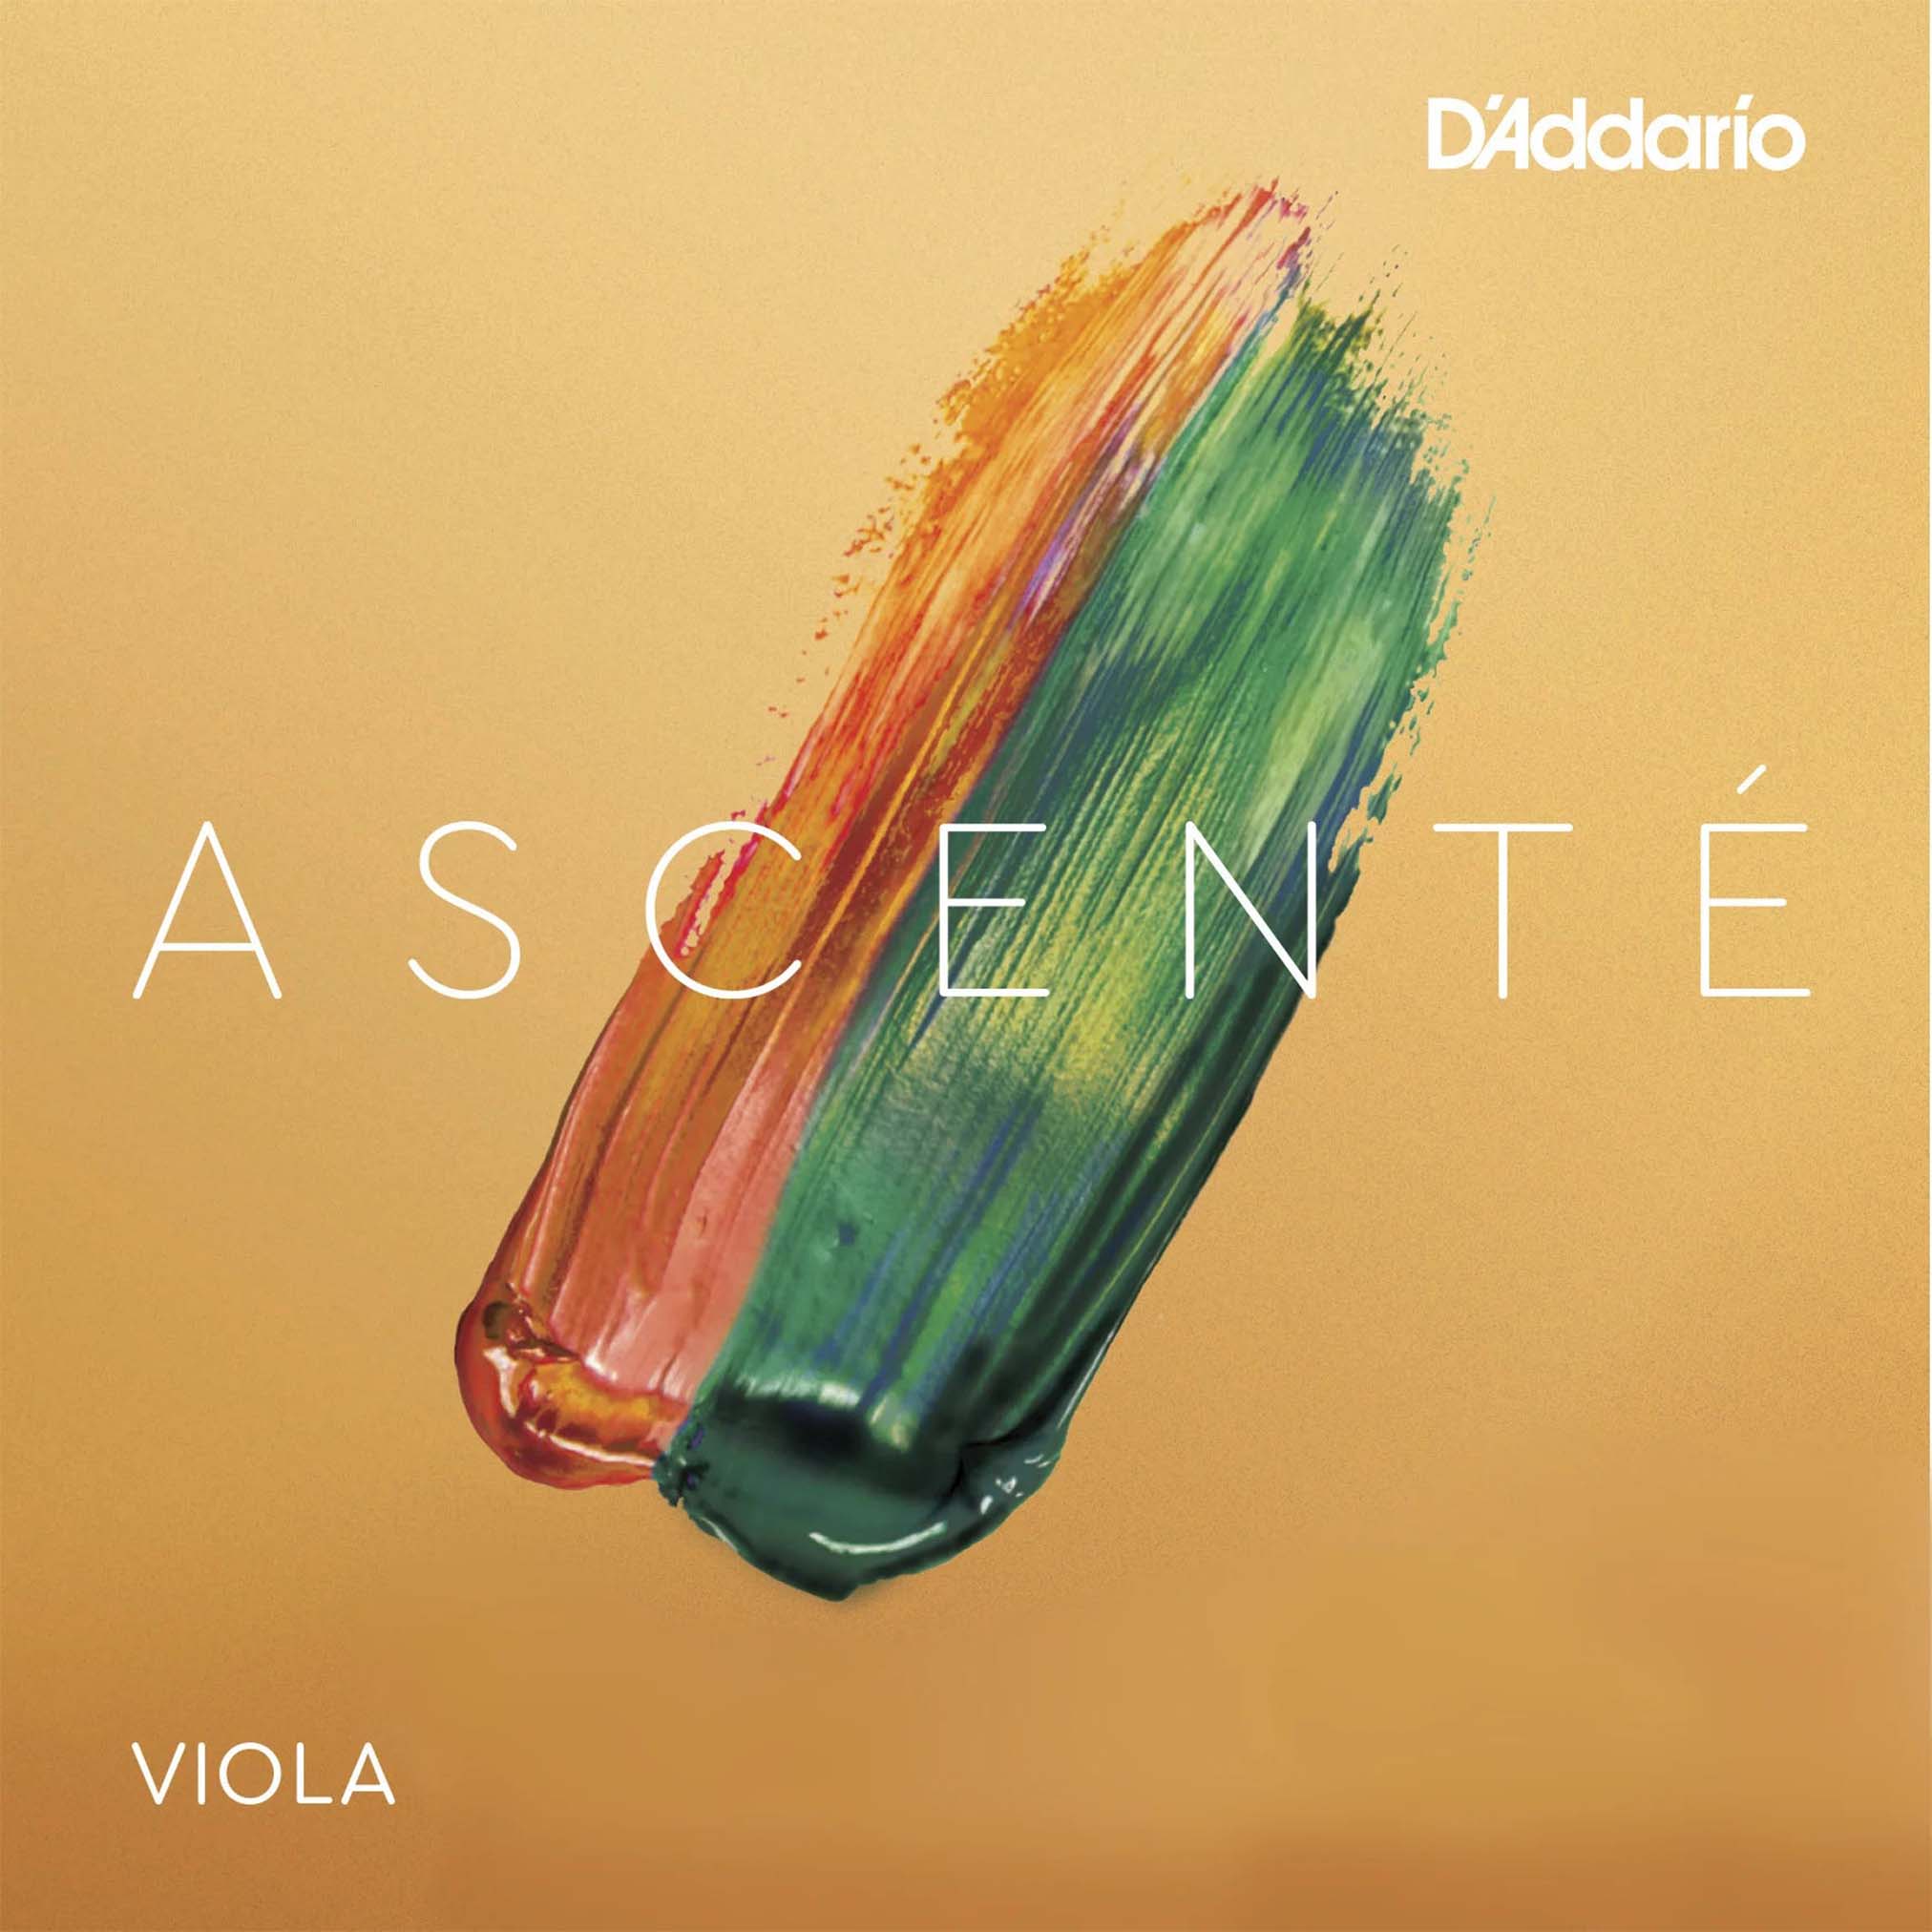 D'addario Ascenté Viola String Set